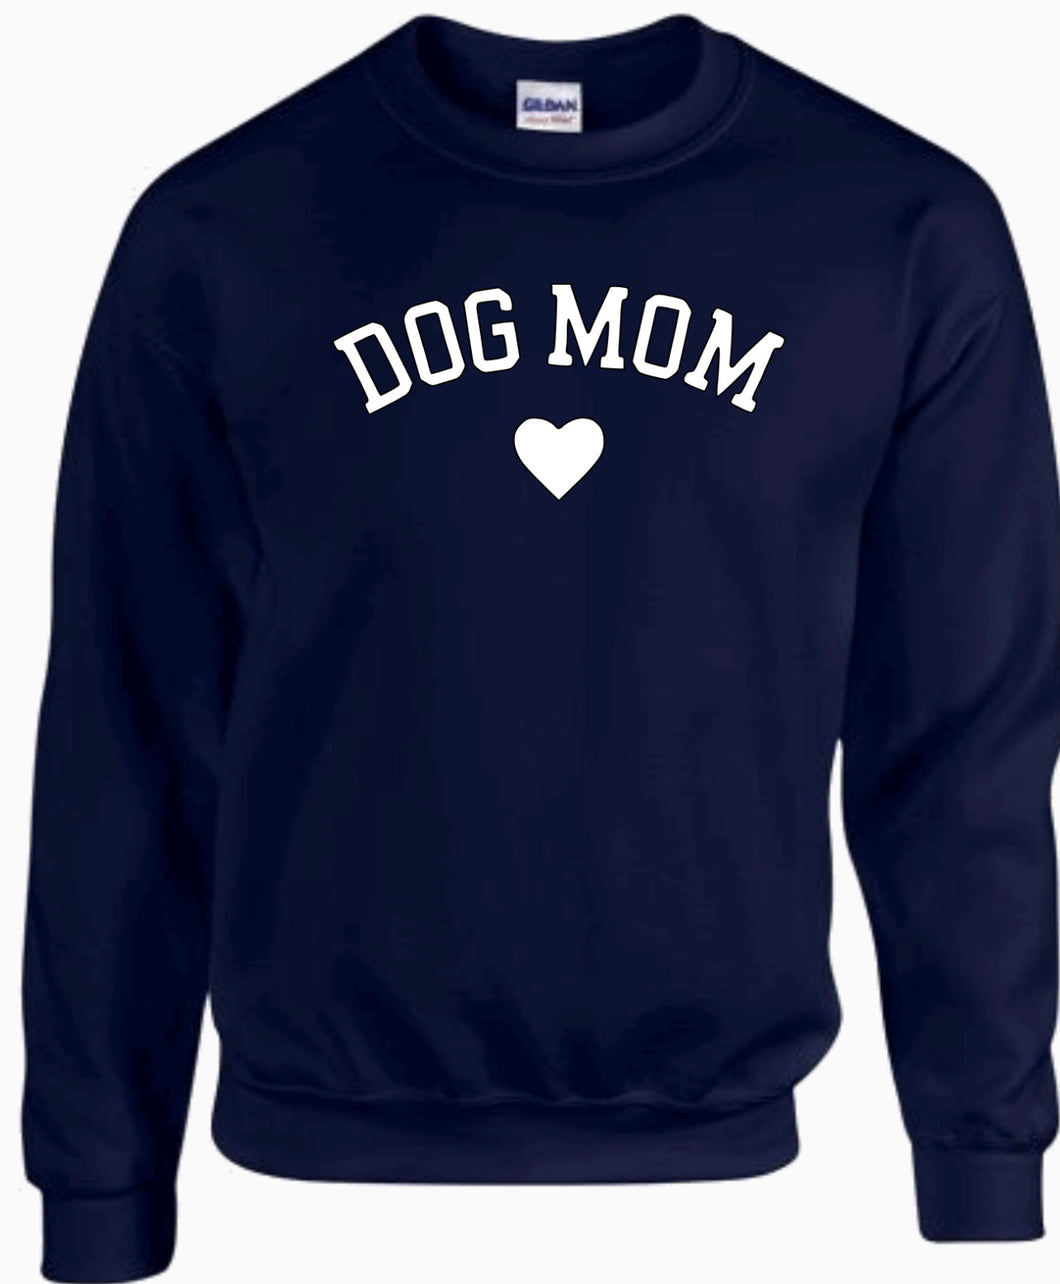 Dog Mom Crew Neck Sweatshirt